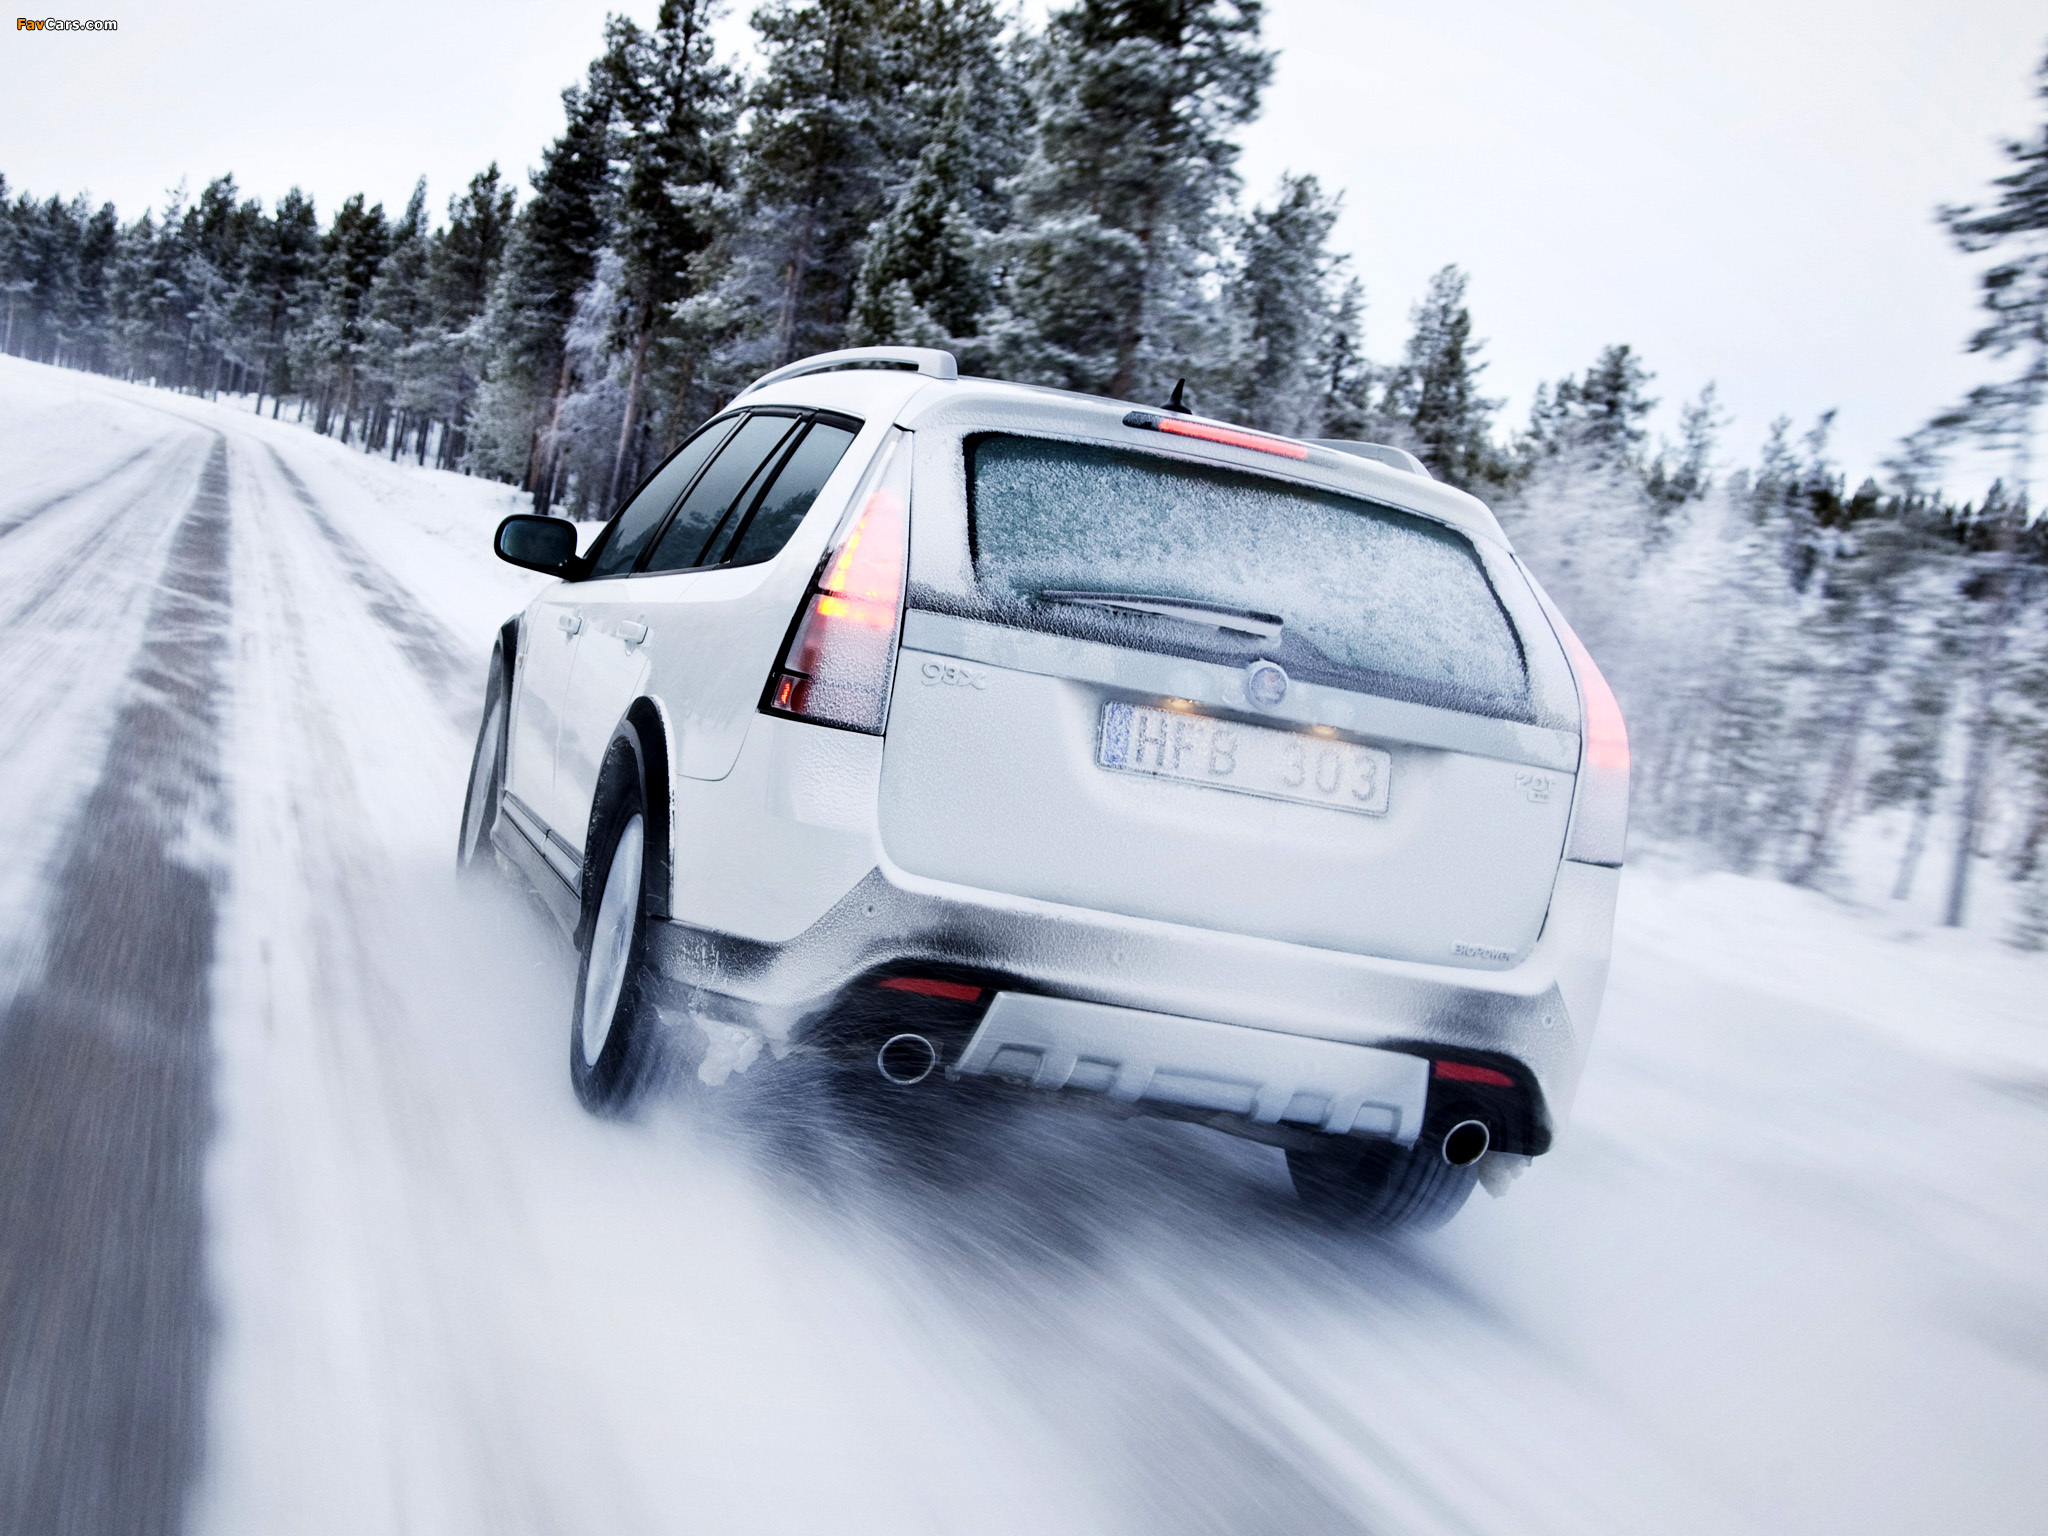 Тест драйв снег. Машина зима. Машина зимой. Машина на зимней дороге. Машина в снегу.